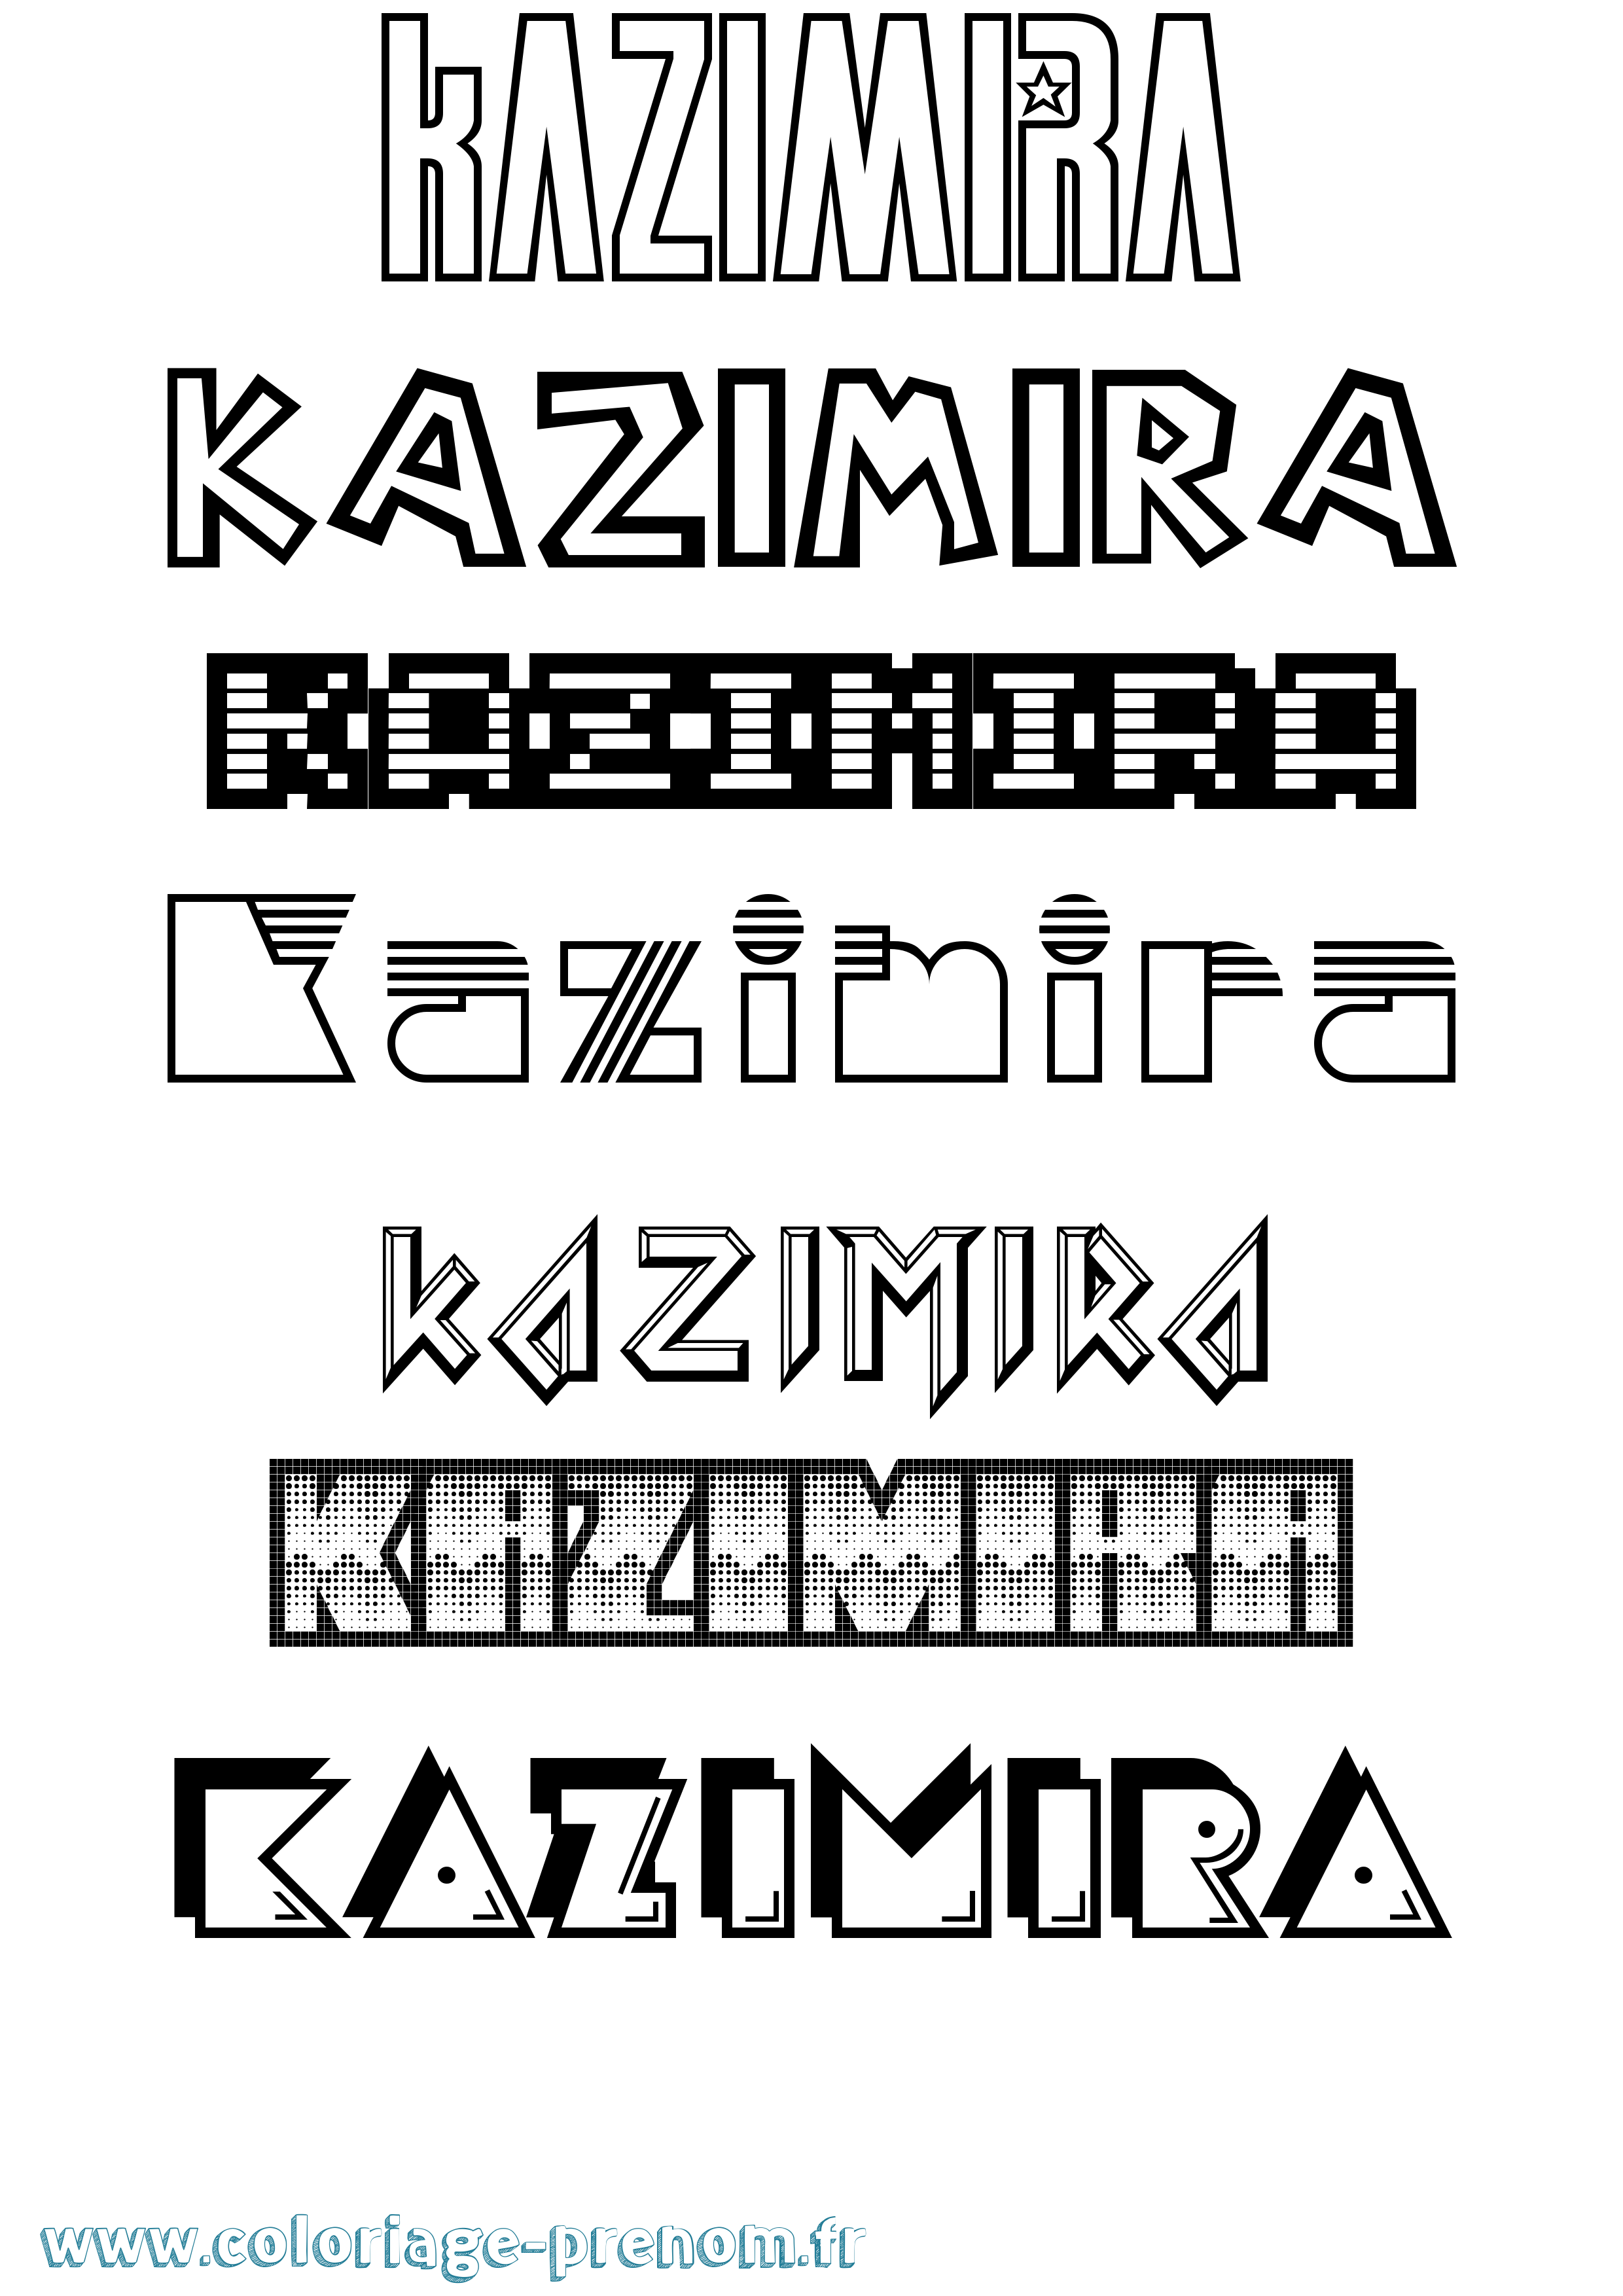 Coloriage prénom Kazimira Jeux Vidéos